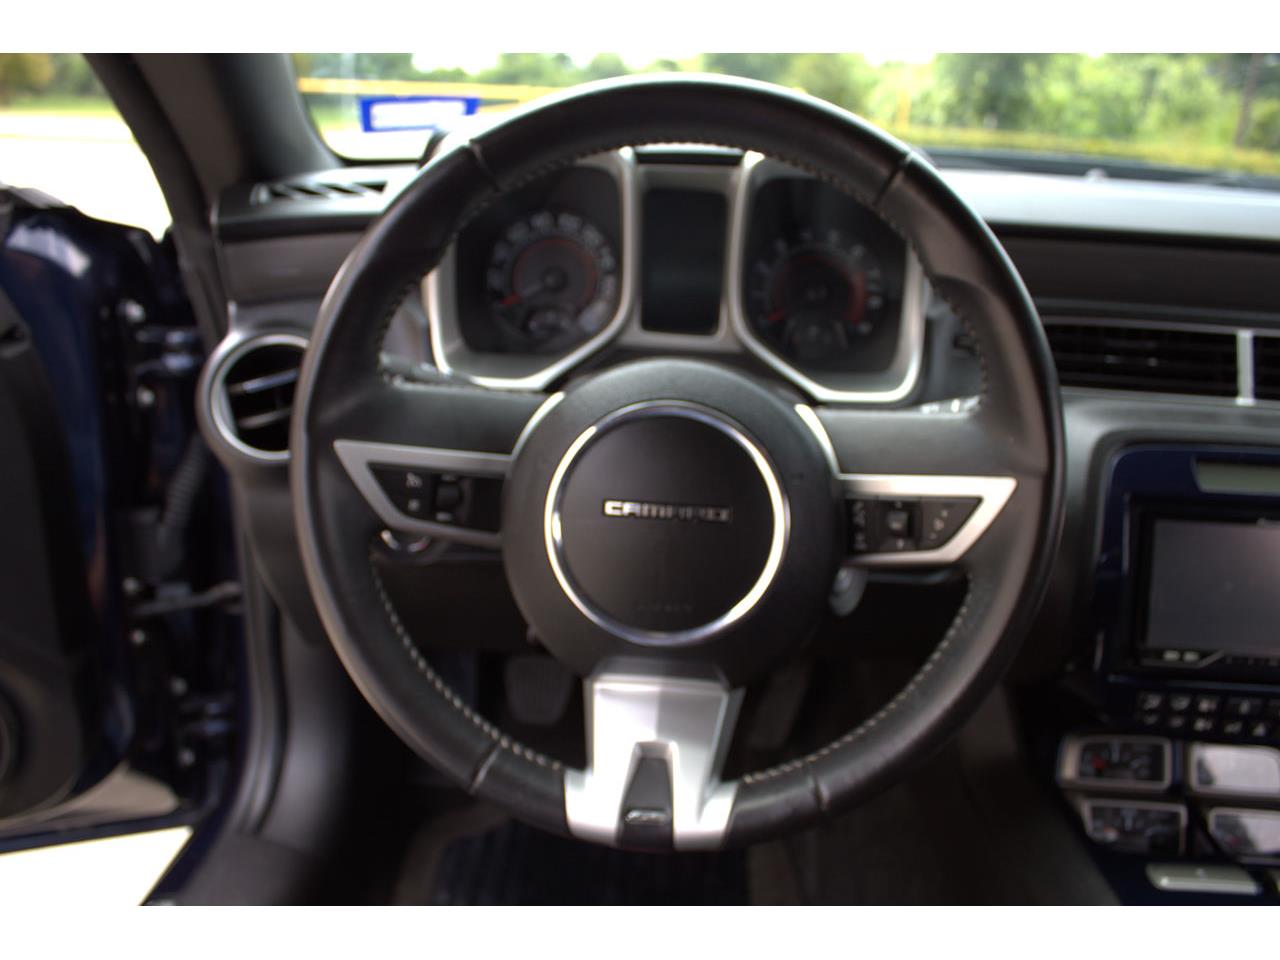 2010 Camaro Ss Steering Wheel